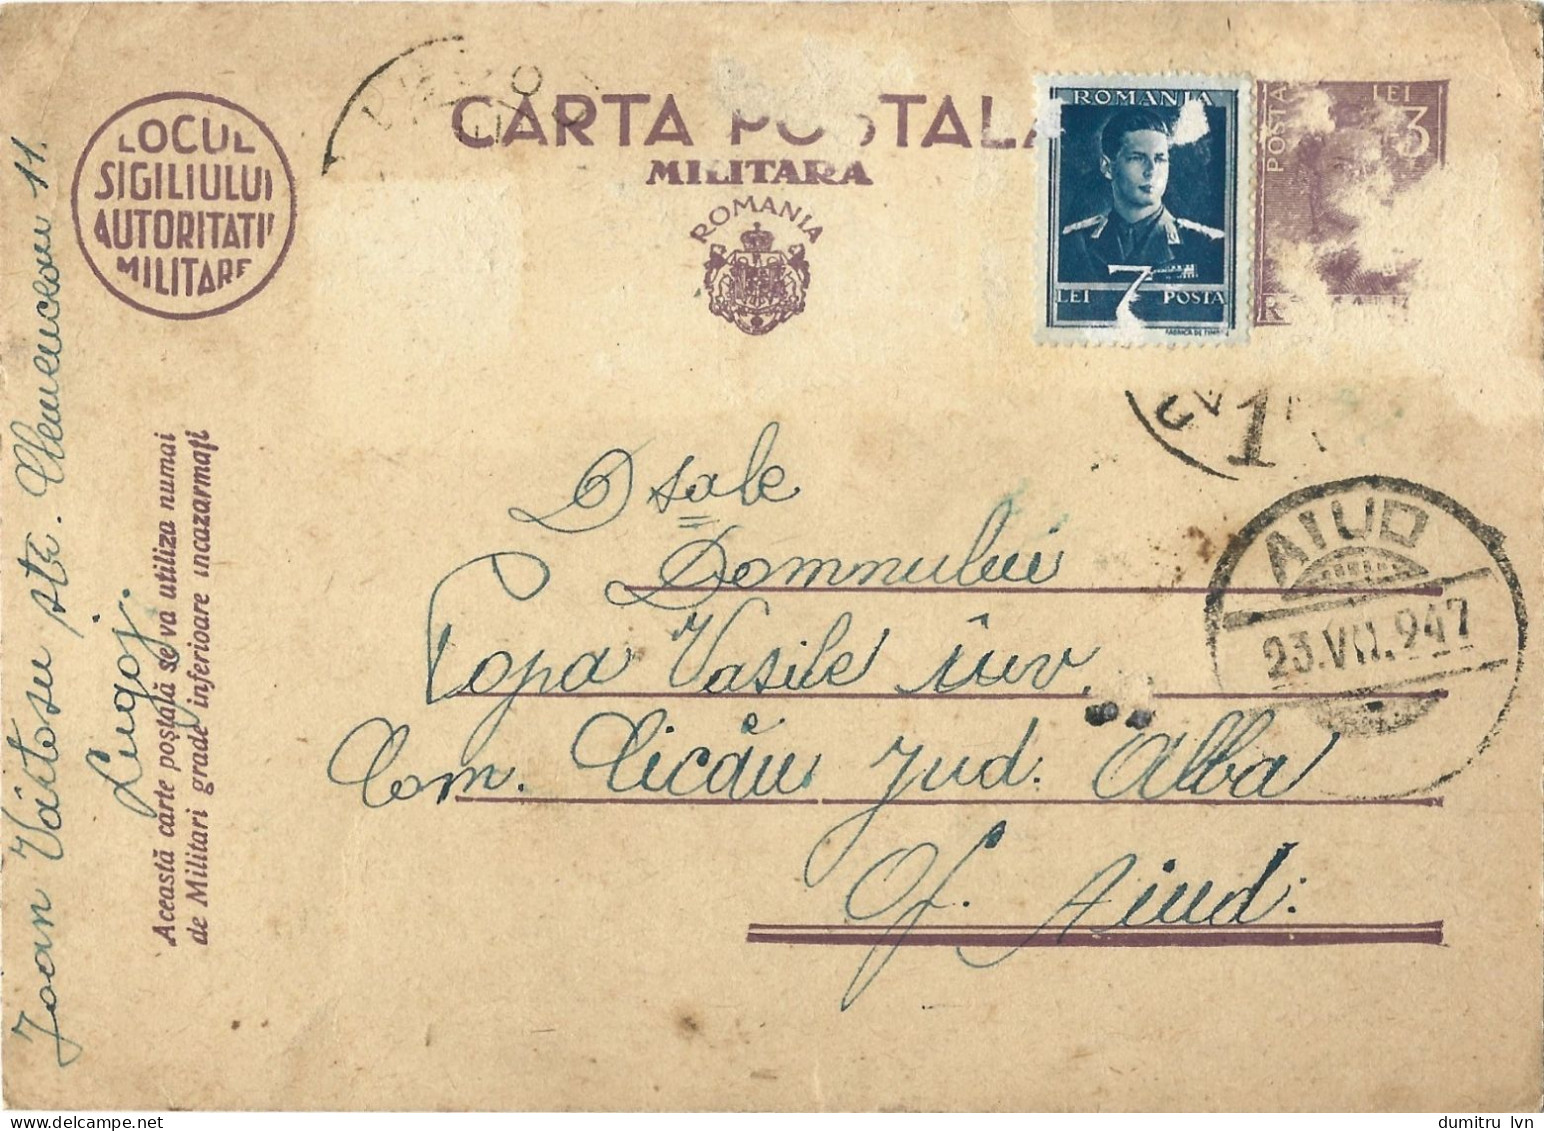 ROMANIA 1947 MILITARY POSTCARD, POSTCARD STATIONERY - World War 2 Letters